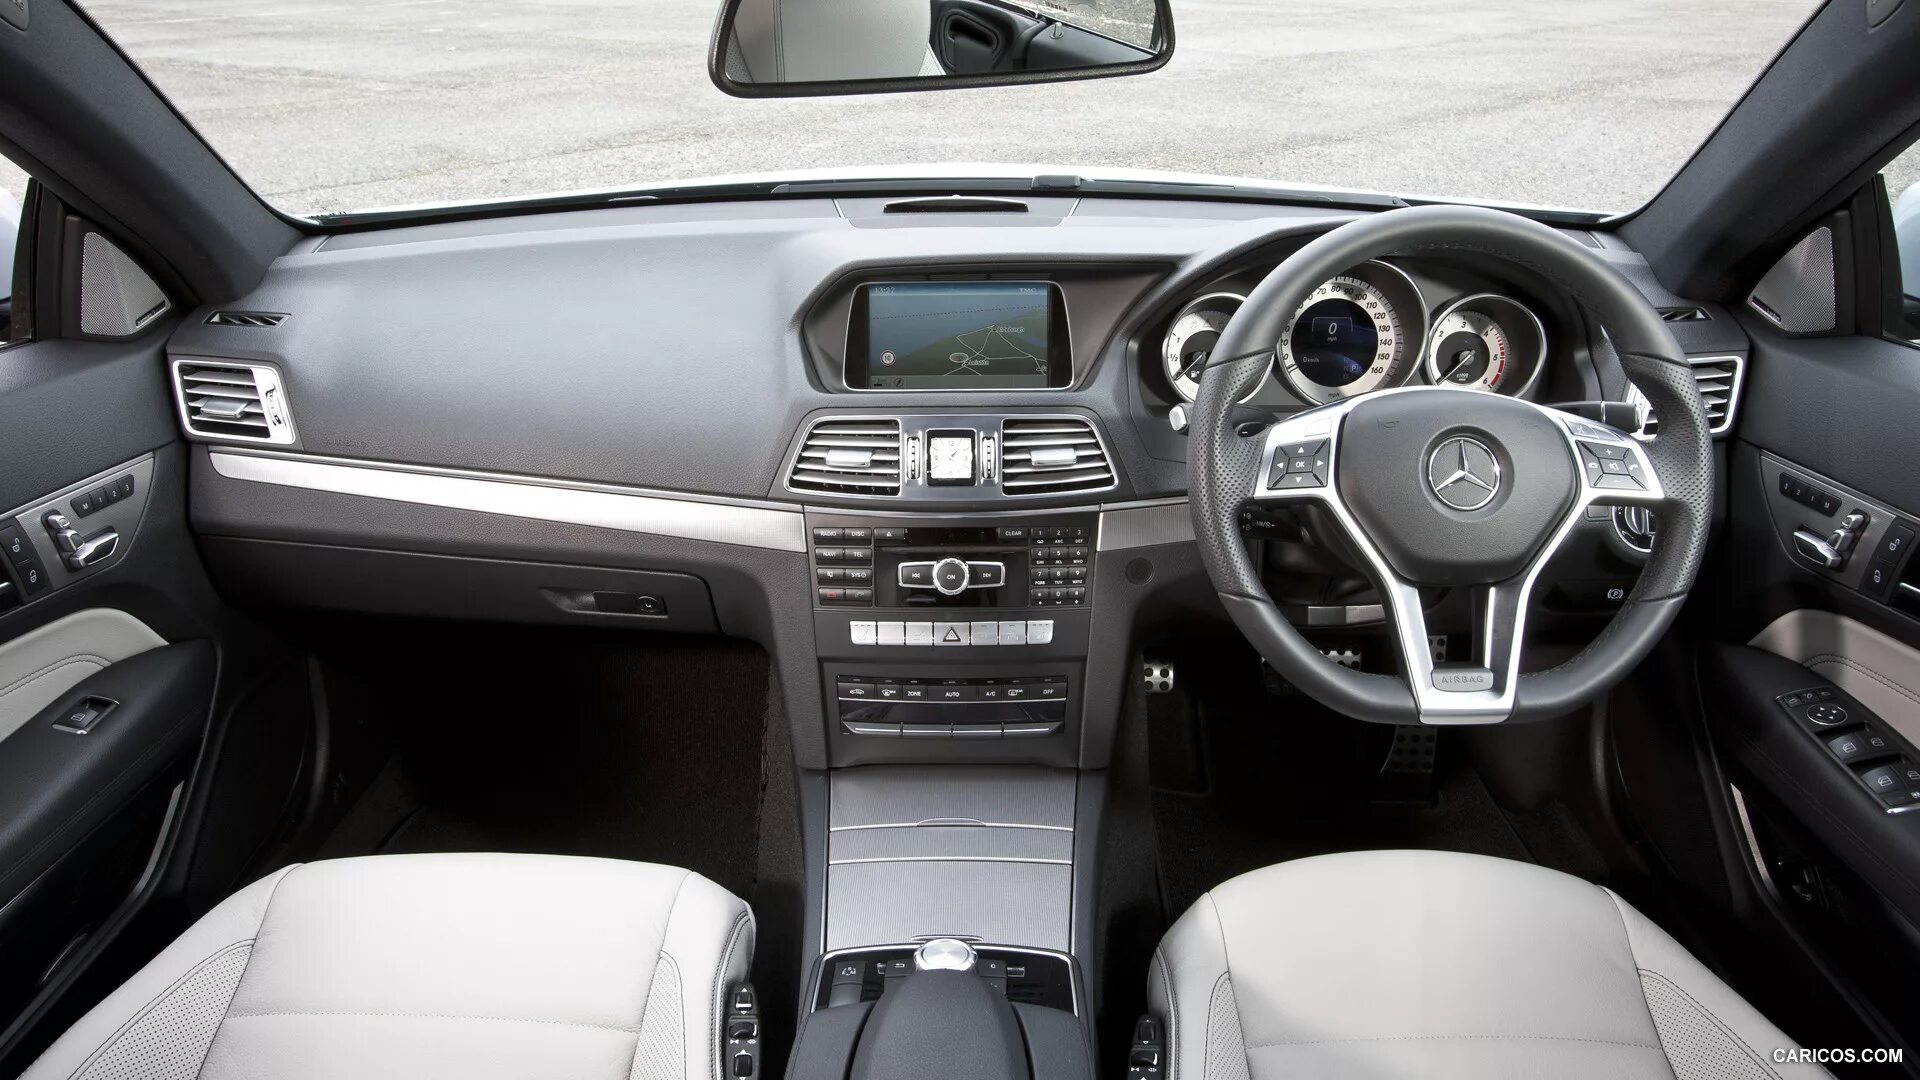 Mercedes e 2014. Mercedes e220 2014. Mercedes Coupe c 2014 Interior. Mercedes Benz e klasse 2014 Interior. Mercedes Benz e220 CDI 2014.